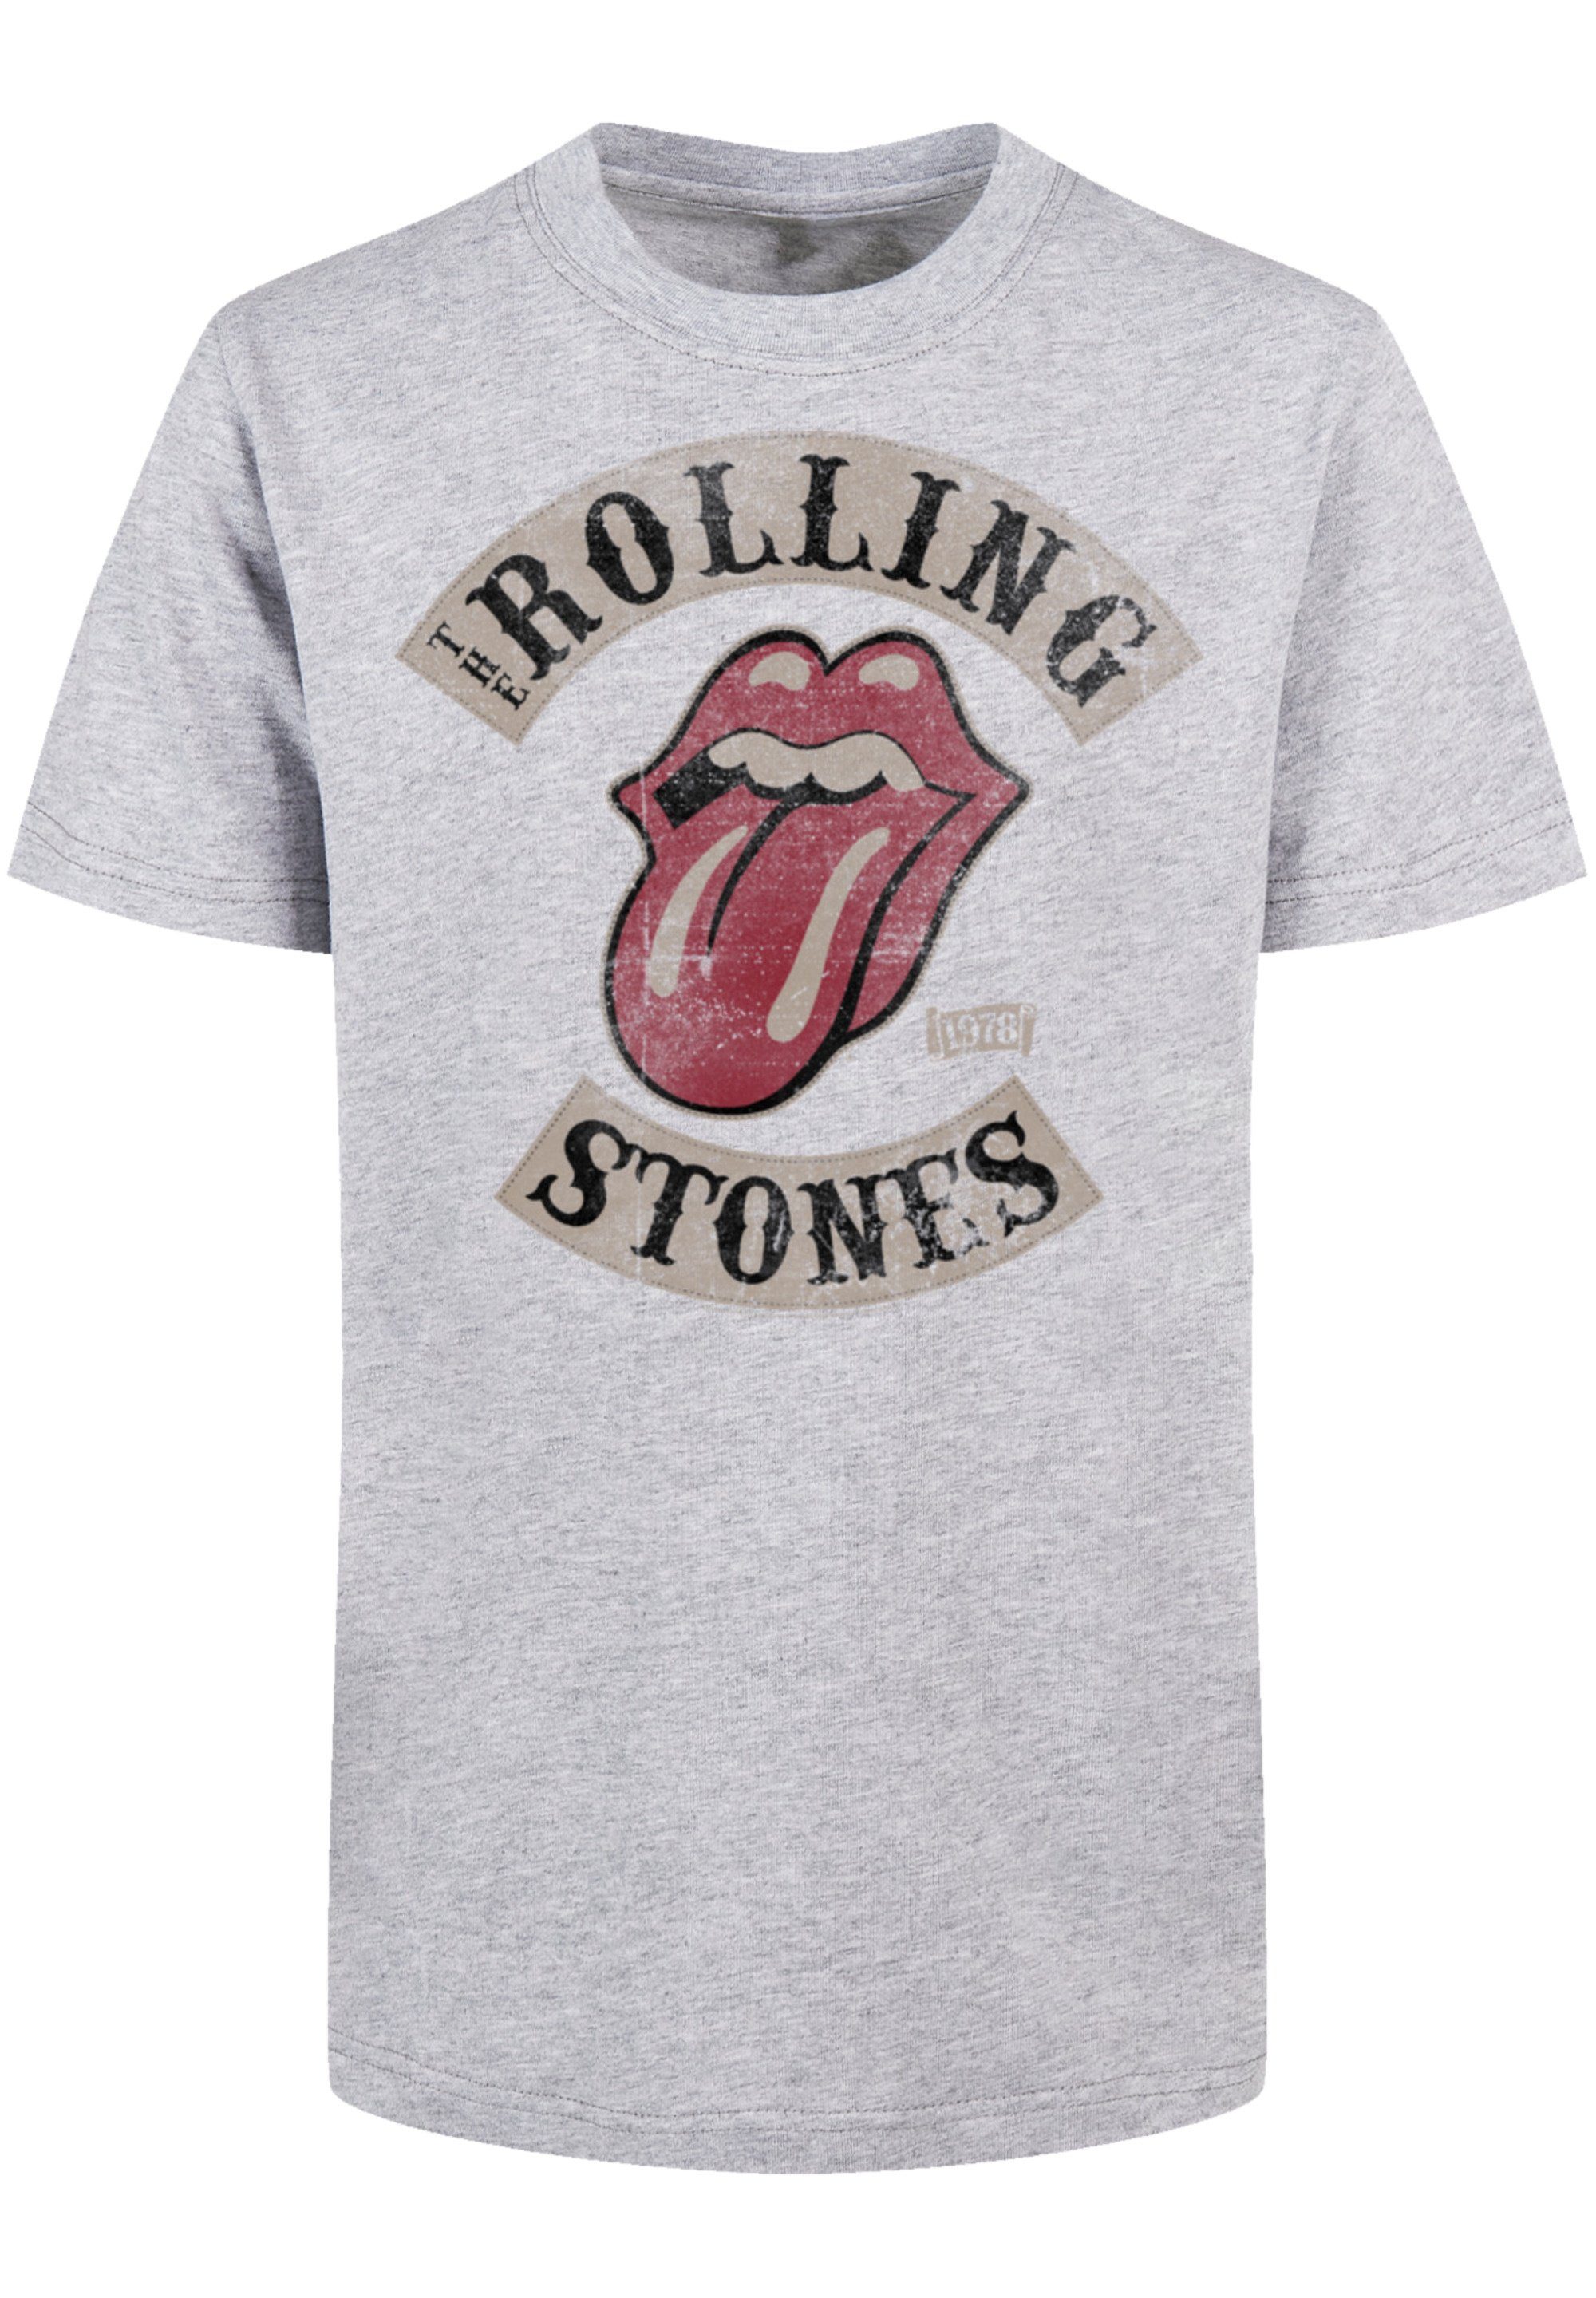 '78 Print Tour Rolling heathergrey F4NT4STIC The Stones T-Shirt